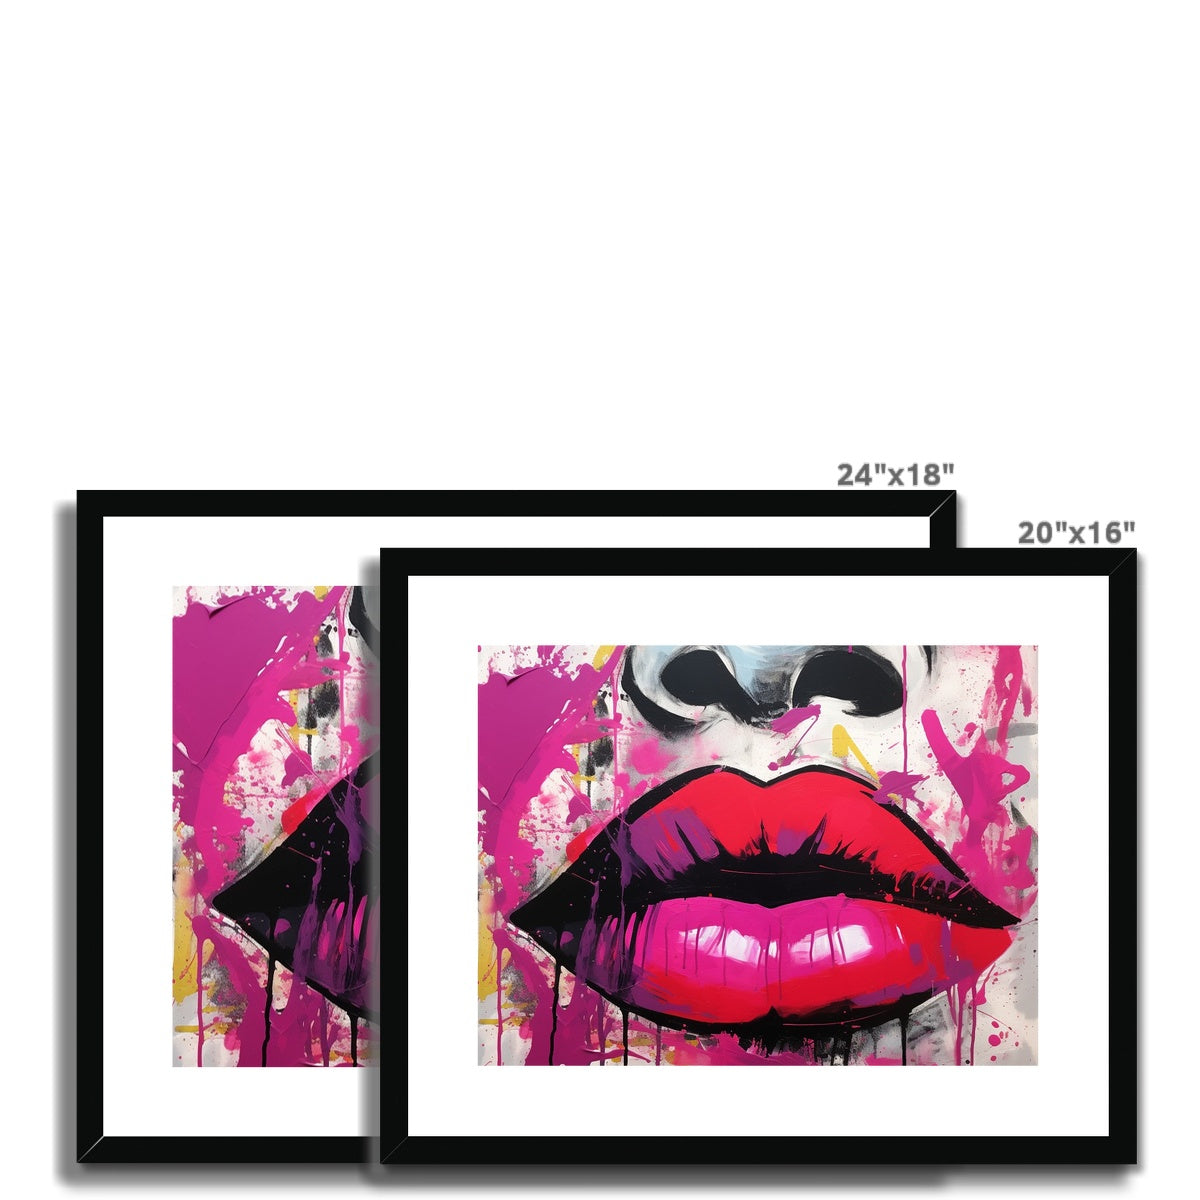 Lipstick Framed & Mounted Print